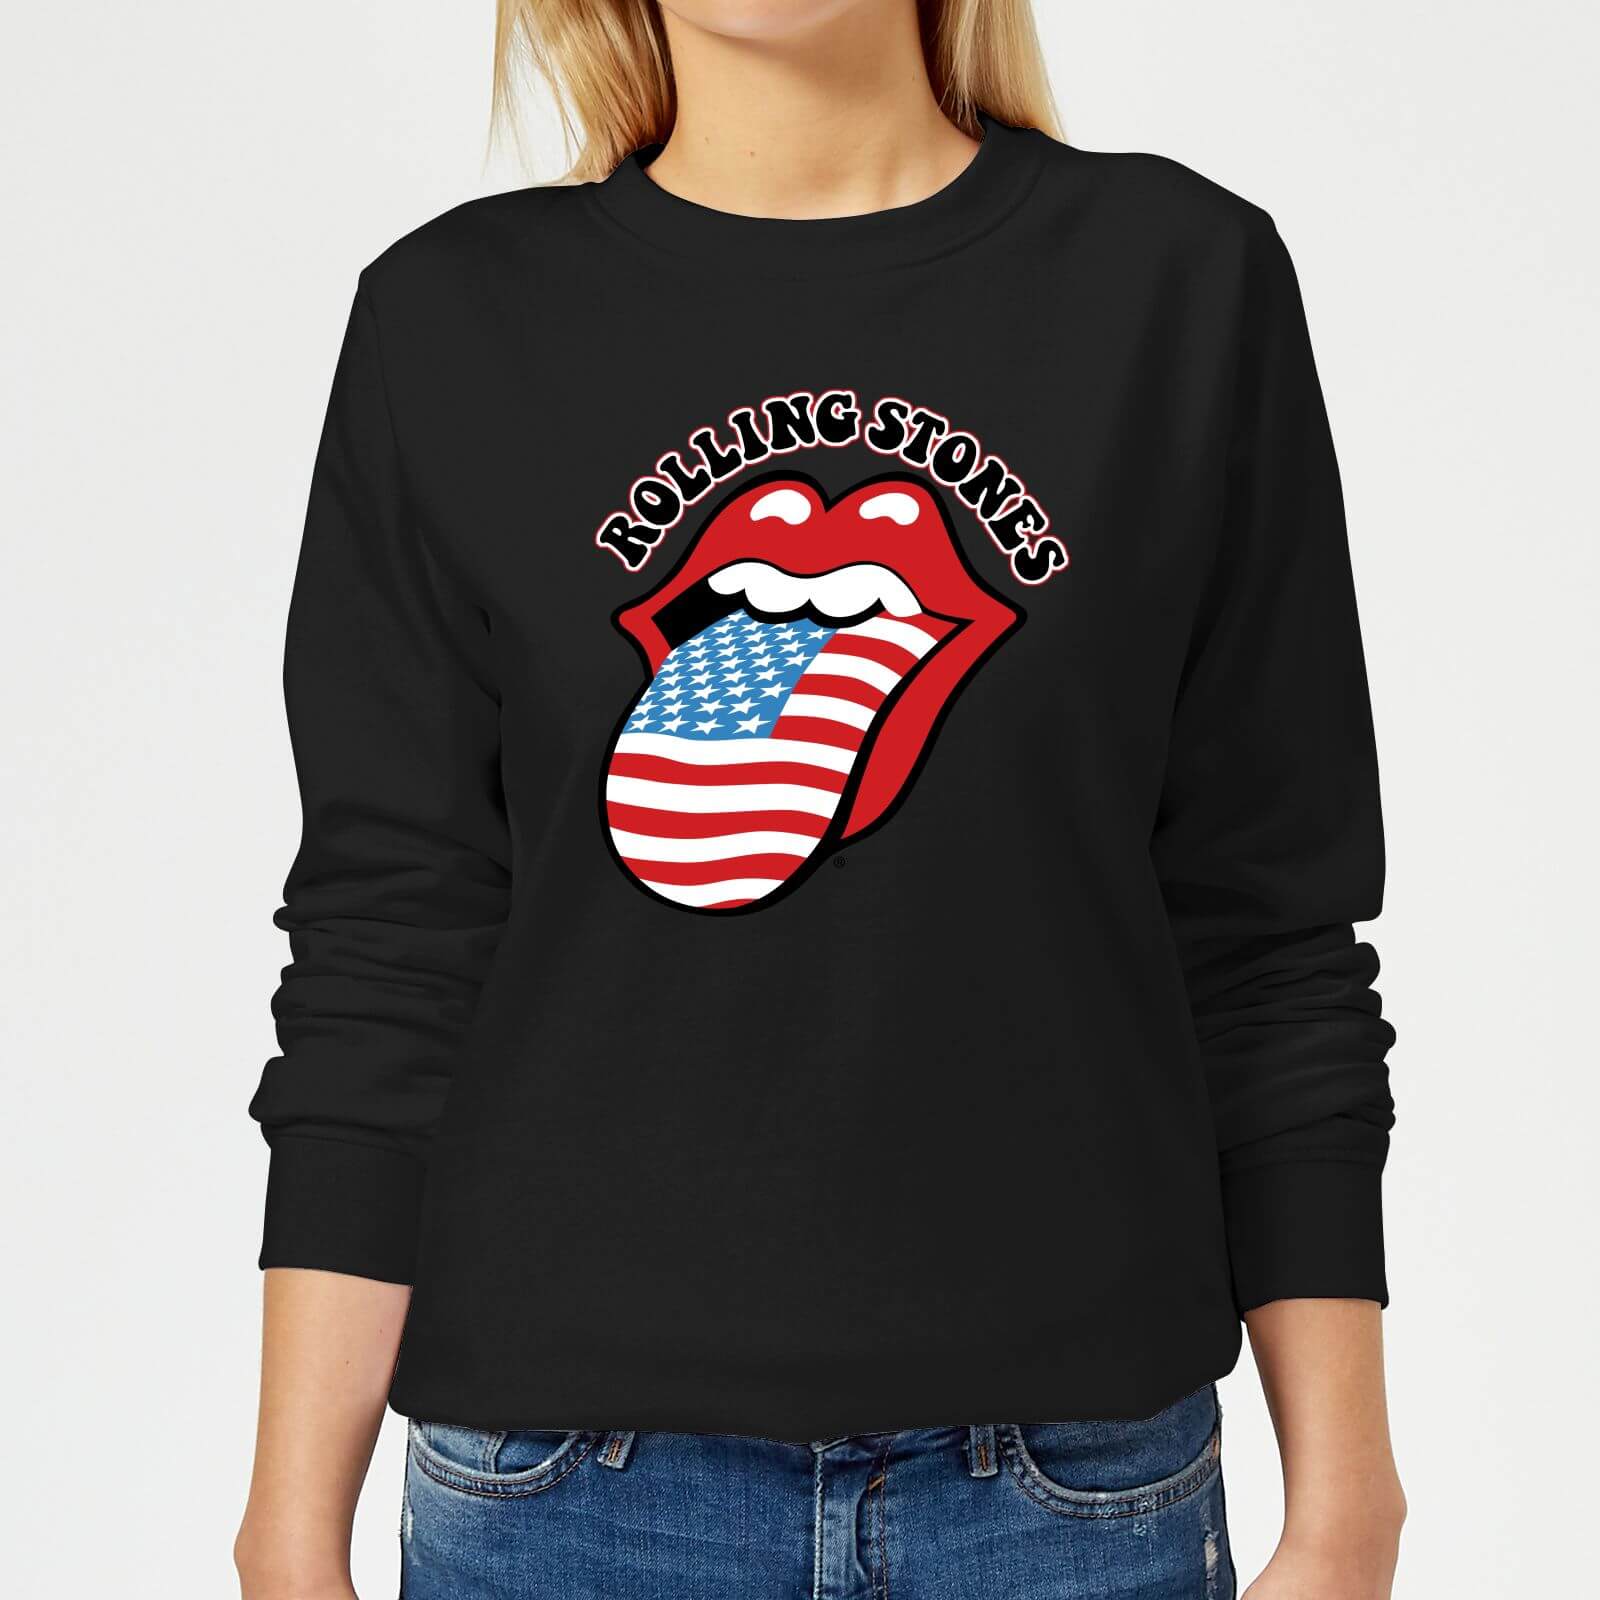 Rolling Stones US Flag Women's Sweatshirt - Black - L - Black